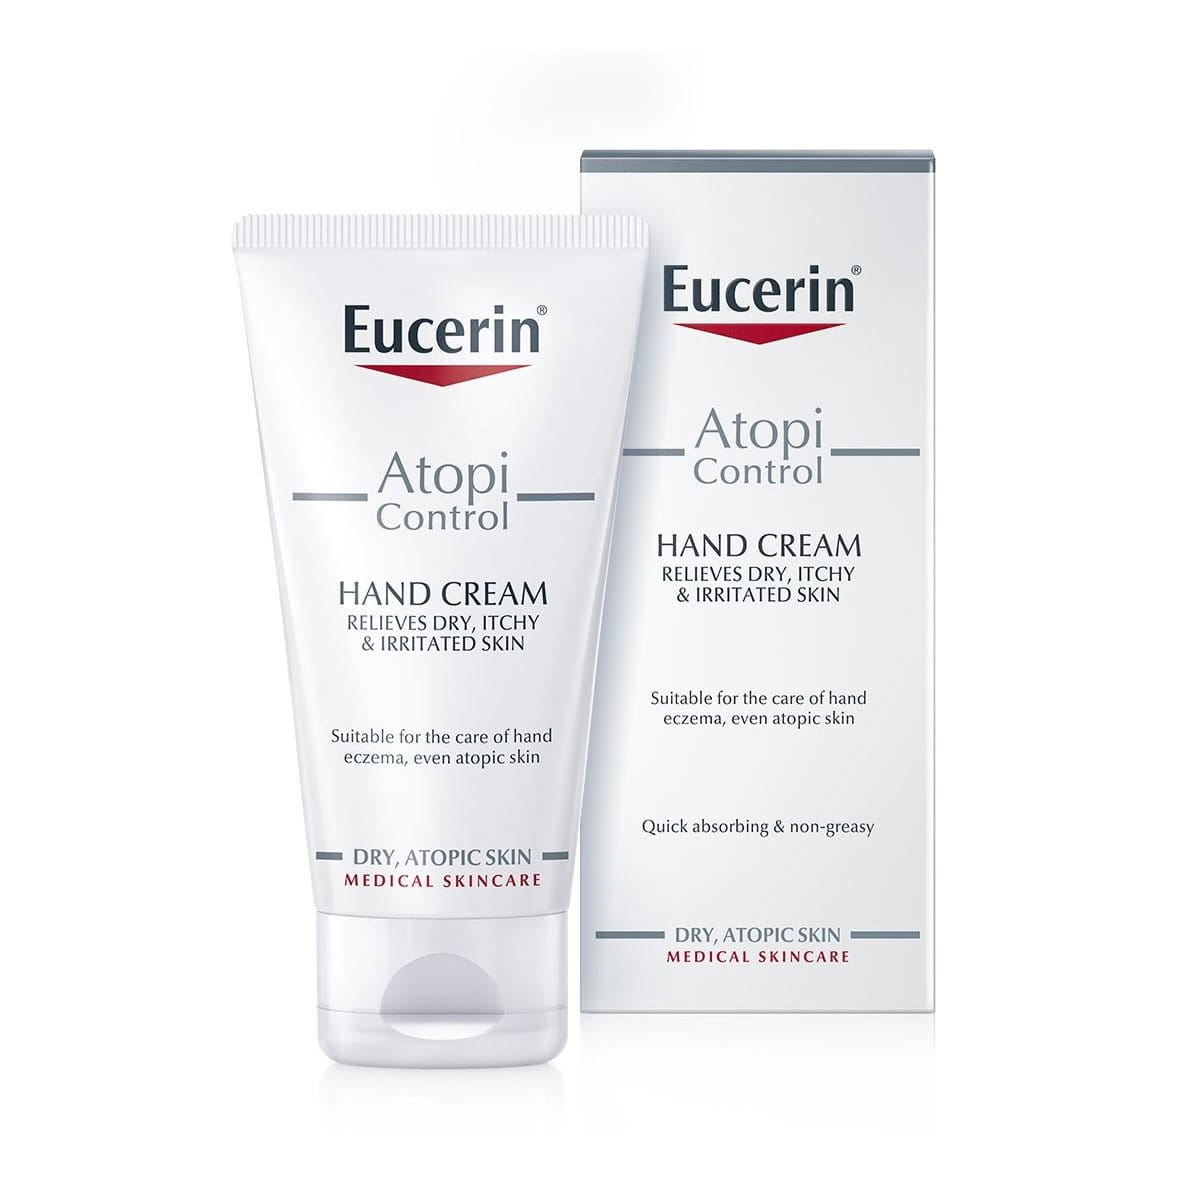 Eucerin AtopiControl Hand Cream
